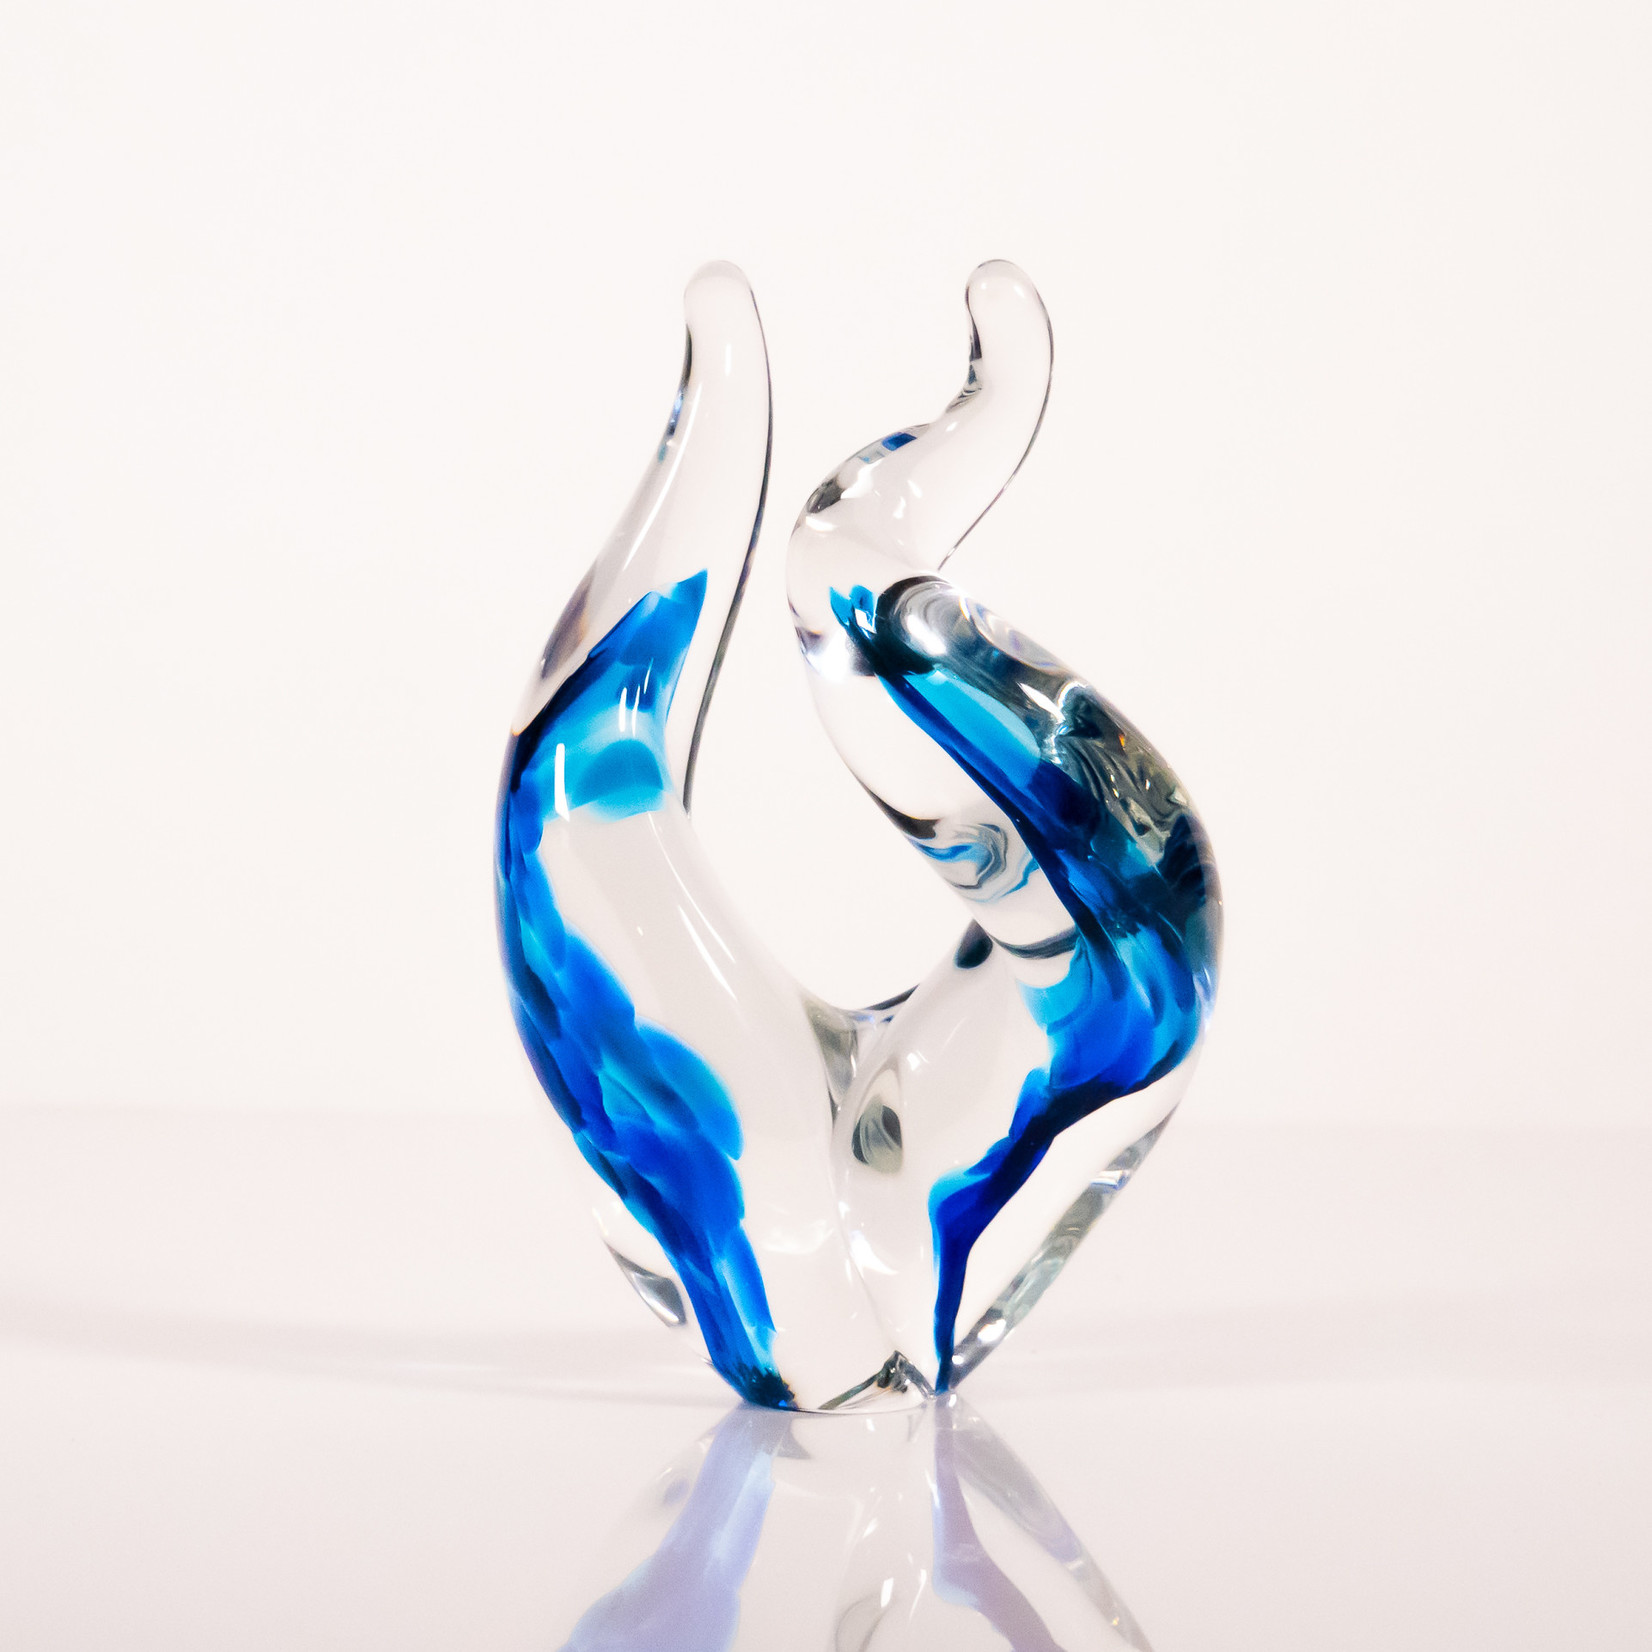 Little River Hot Glass:  Small Sculptural Flame